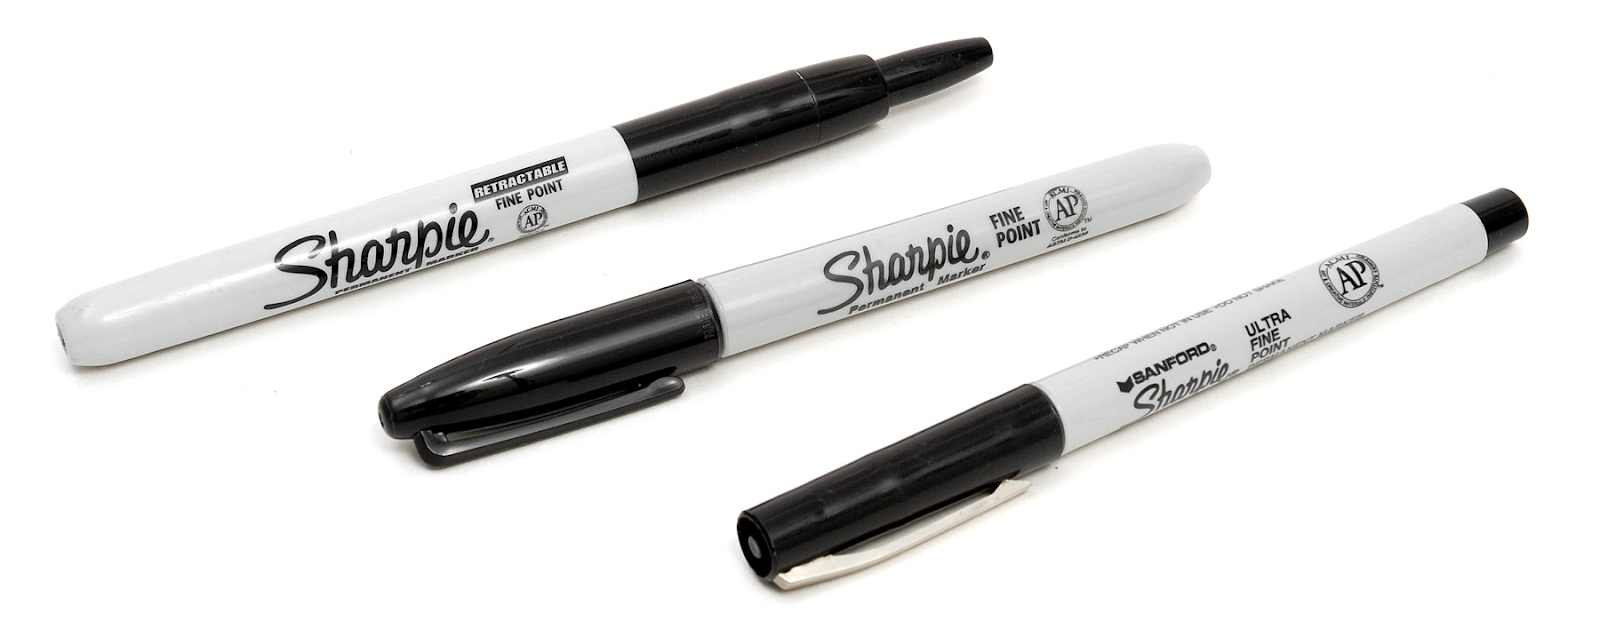 Sharpie Retractable Marker  Pneumatic Technology, Inc.